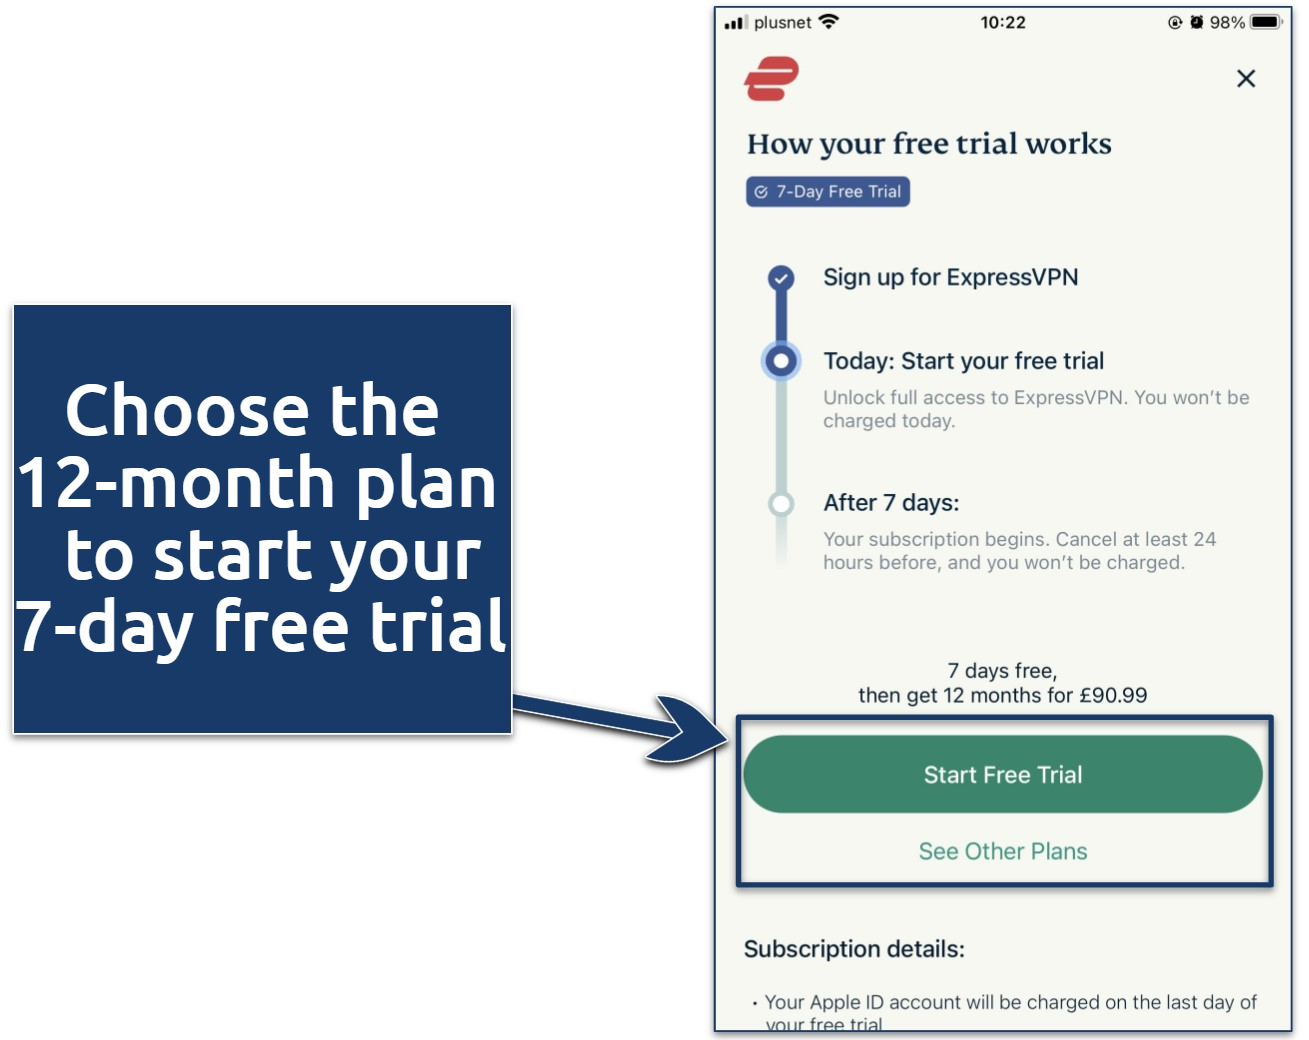 Screenshot explaining how ExpressVPN's free trial works